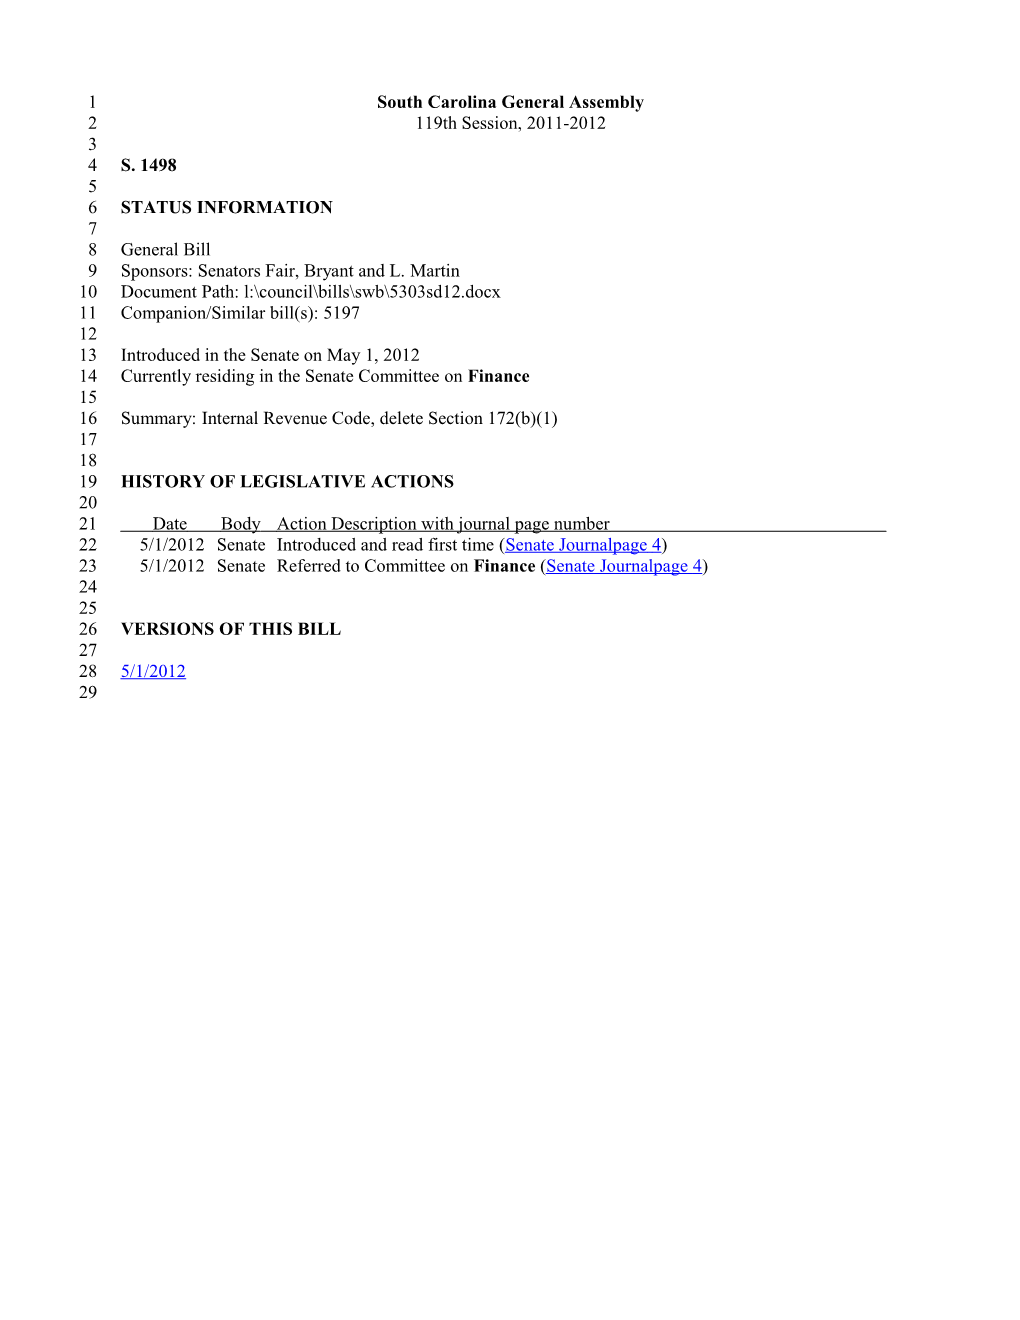 2011-2012 Bill 1498: Internal Revenue Code, Delete Section 172(B)(1) - South Carolina